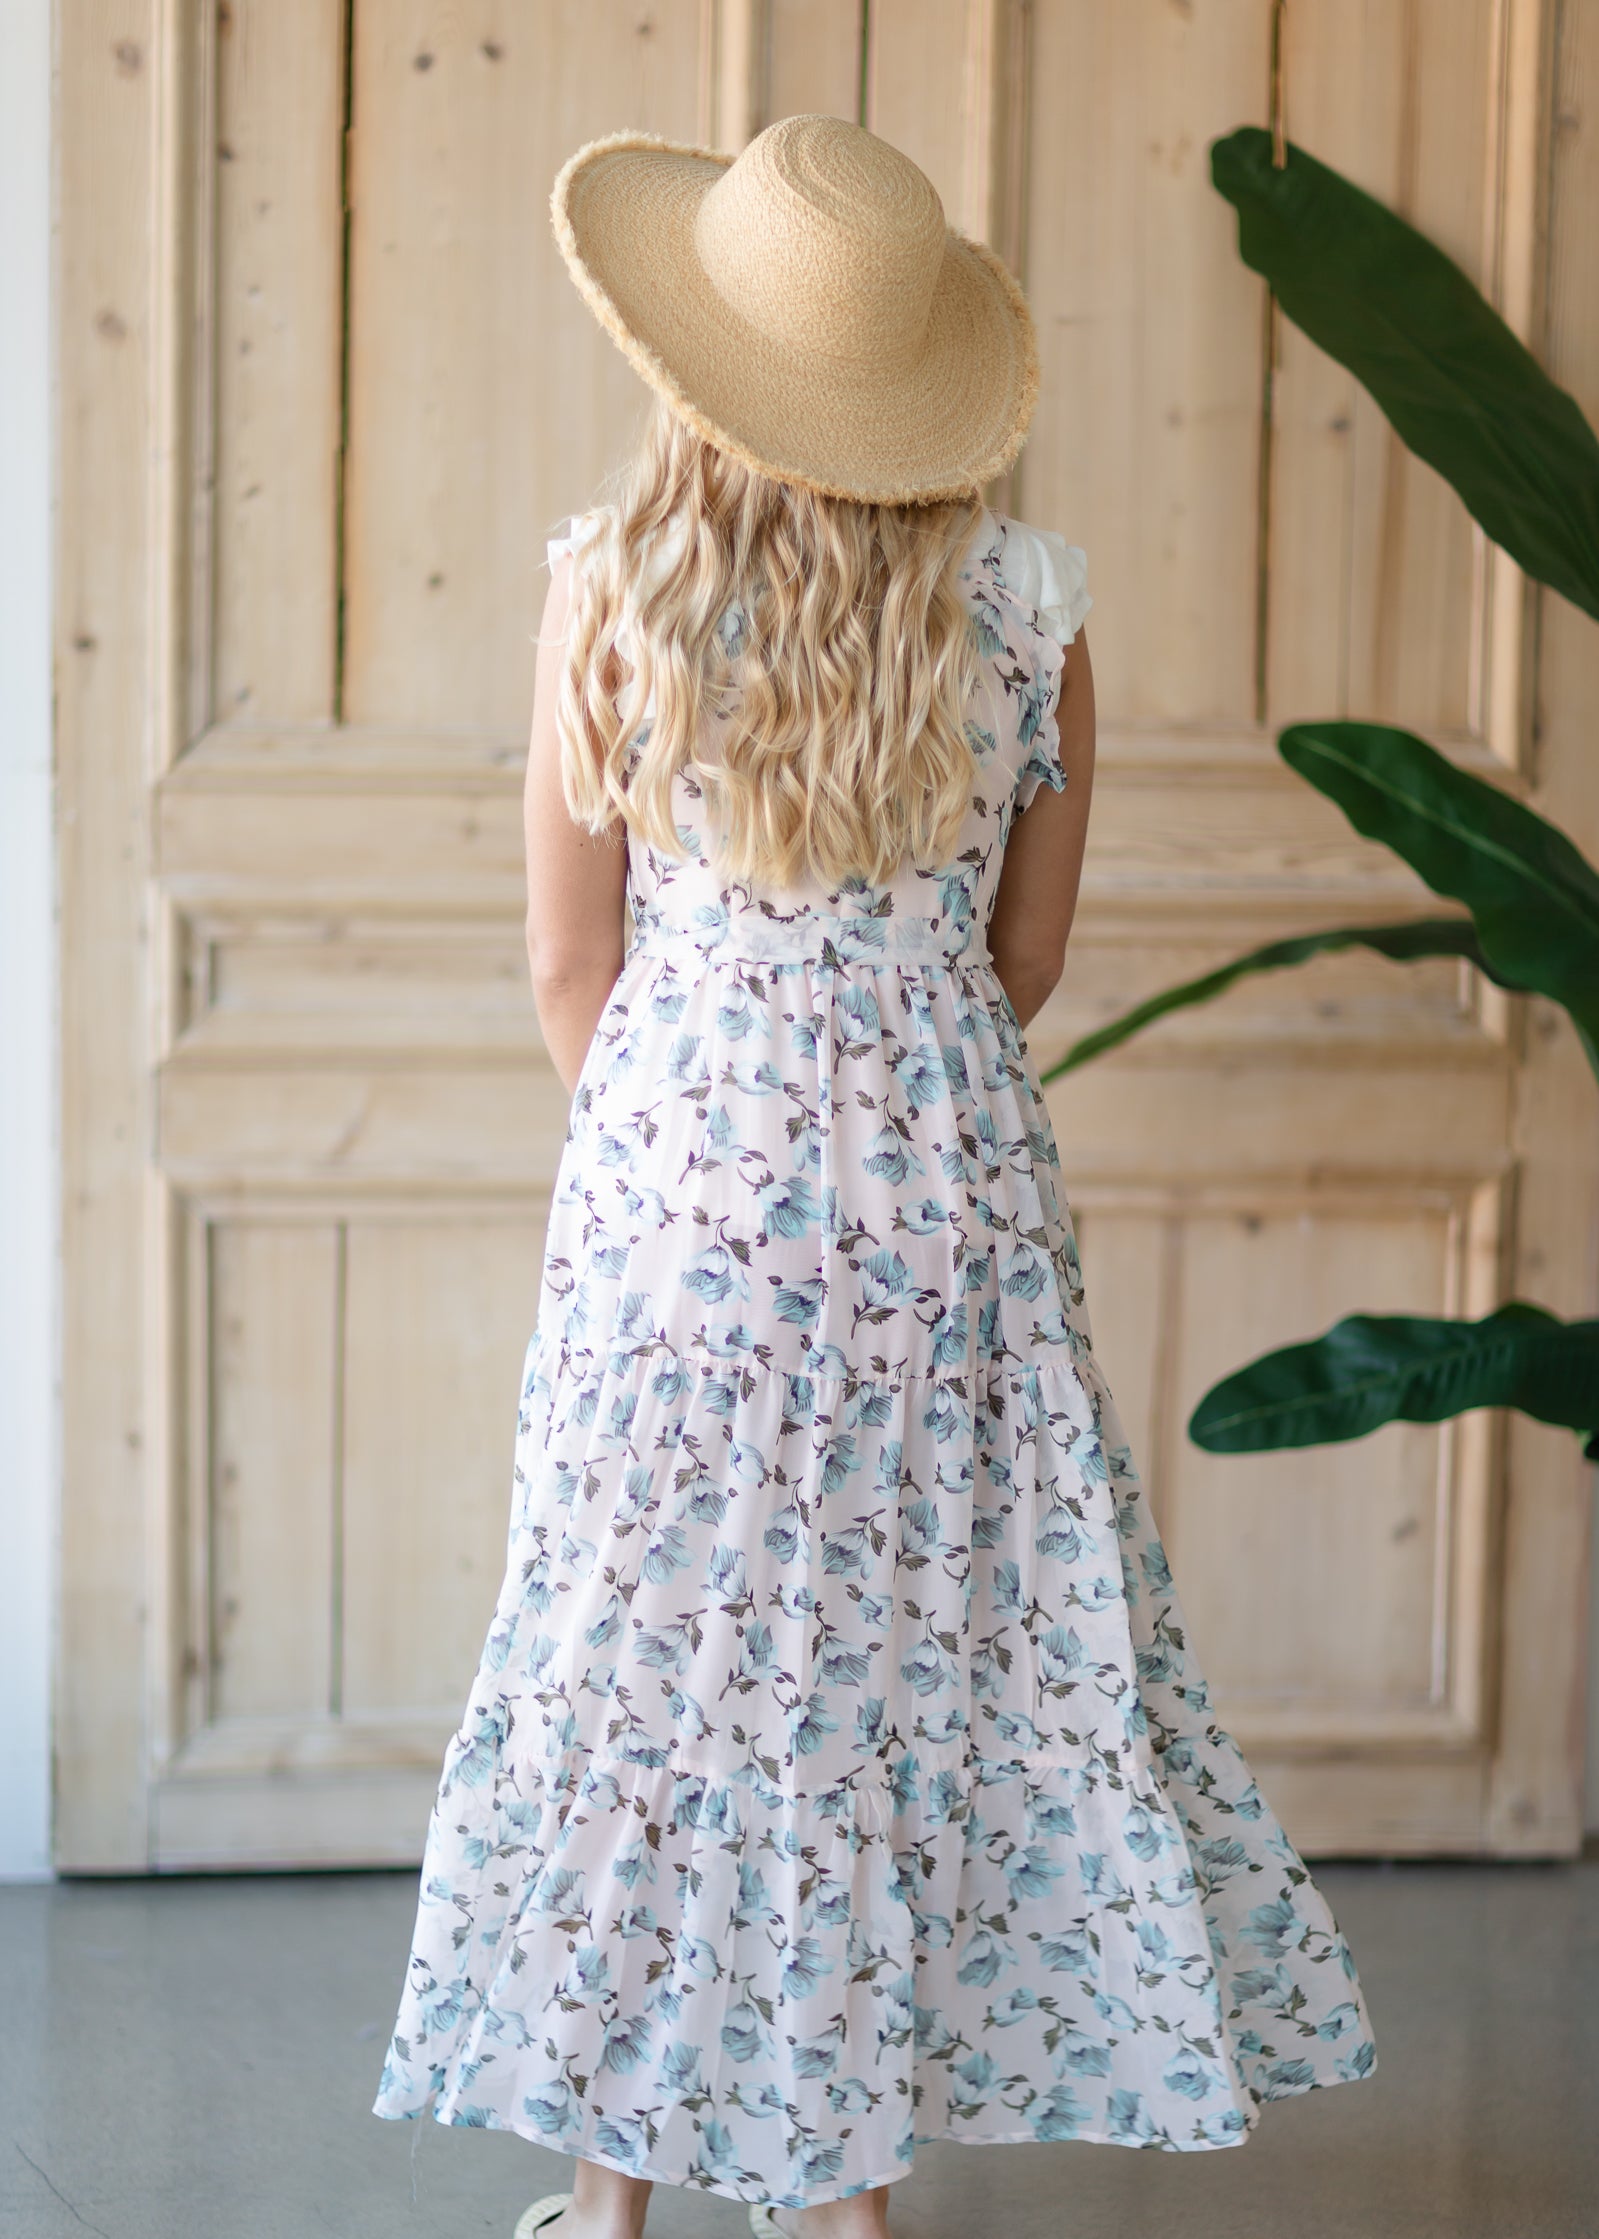 Blush Floral Tiered Maxi Dress - FINAL SALE Dresses